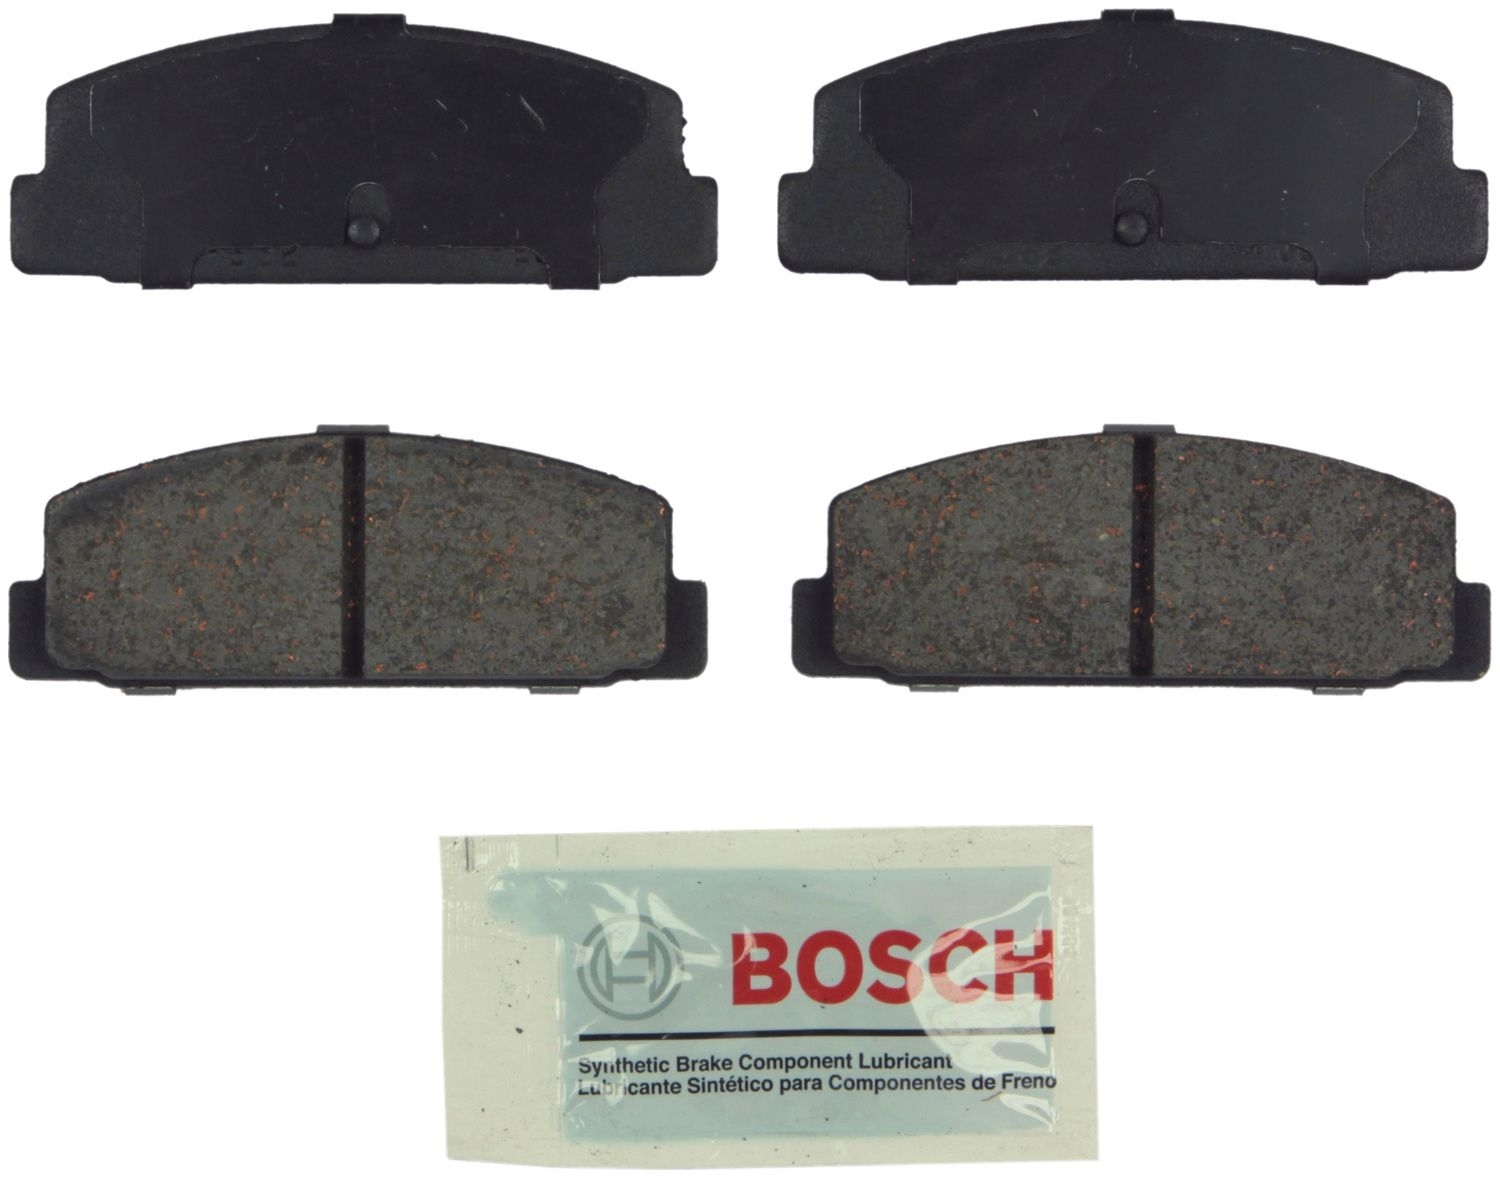 BOSCH BRAKE - Bosch Blue Ceramic Brake Pads (Rear) - BQC BE332